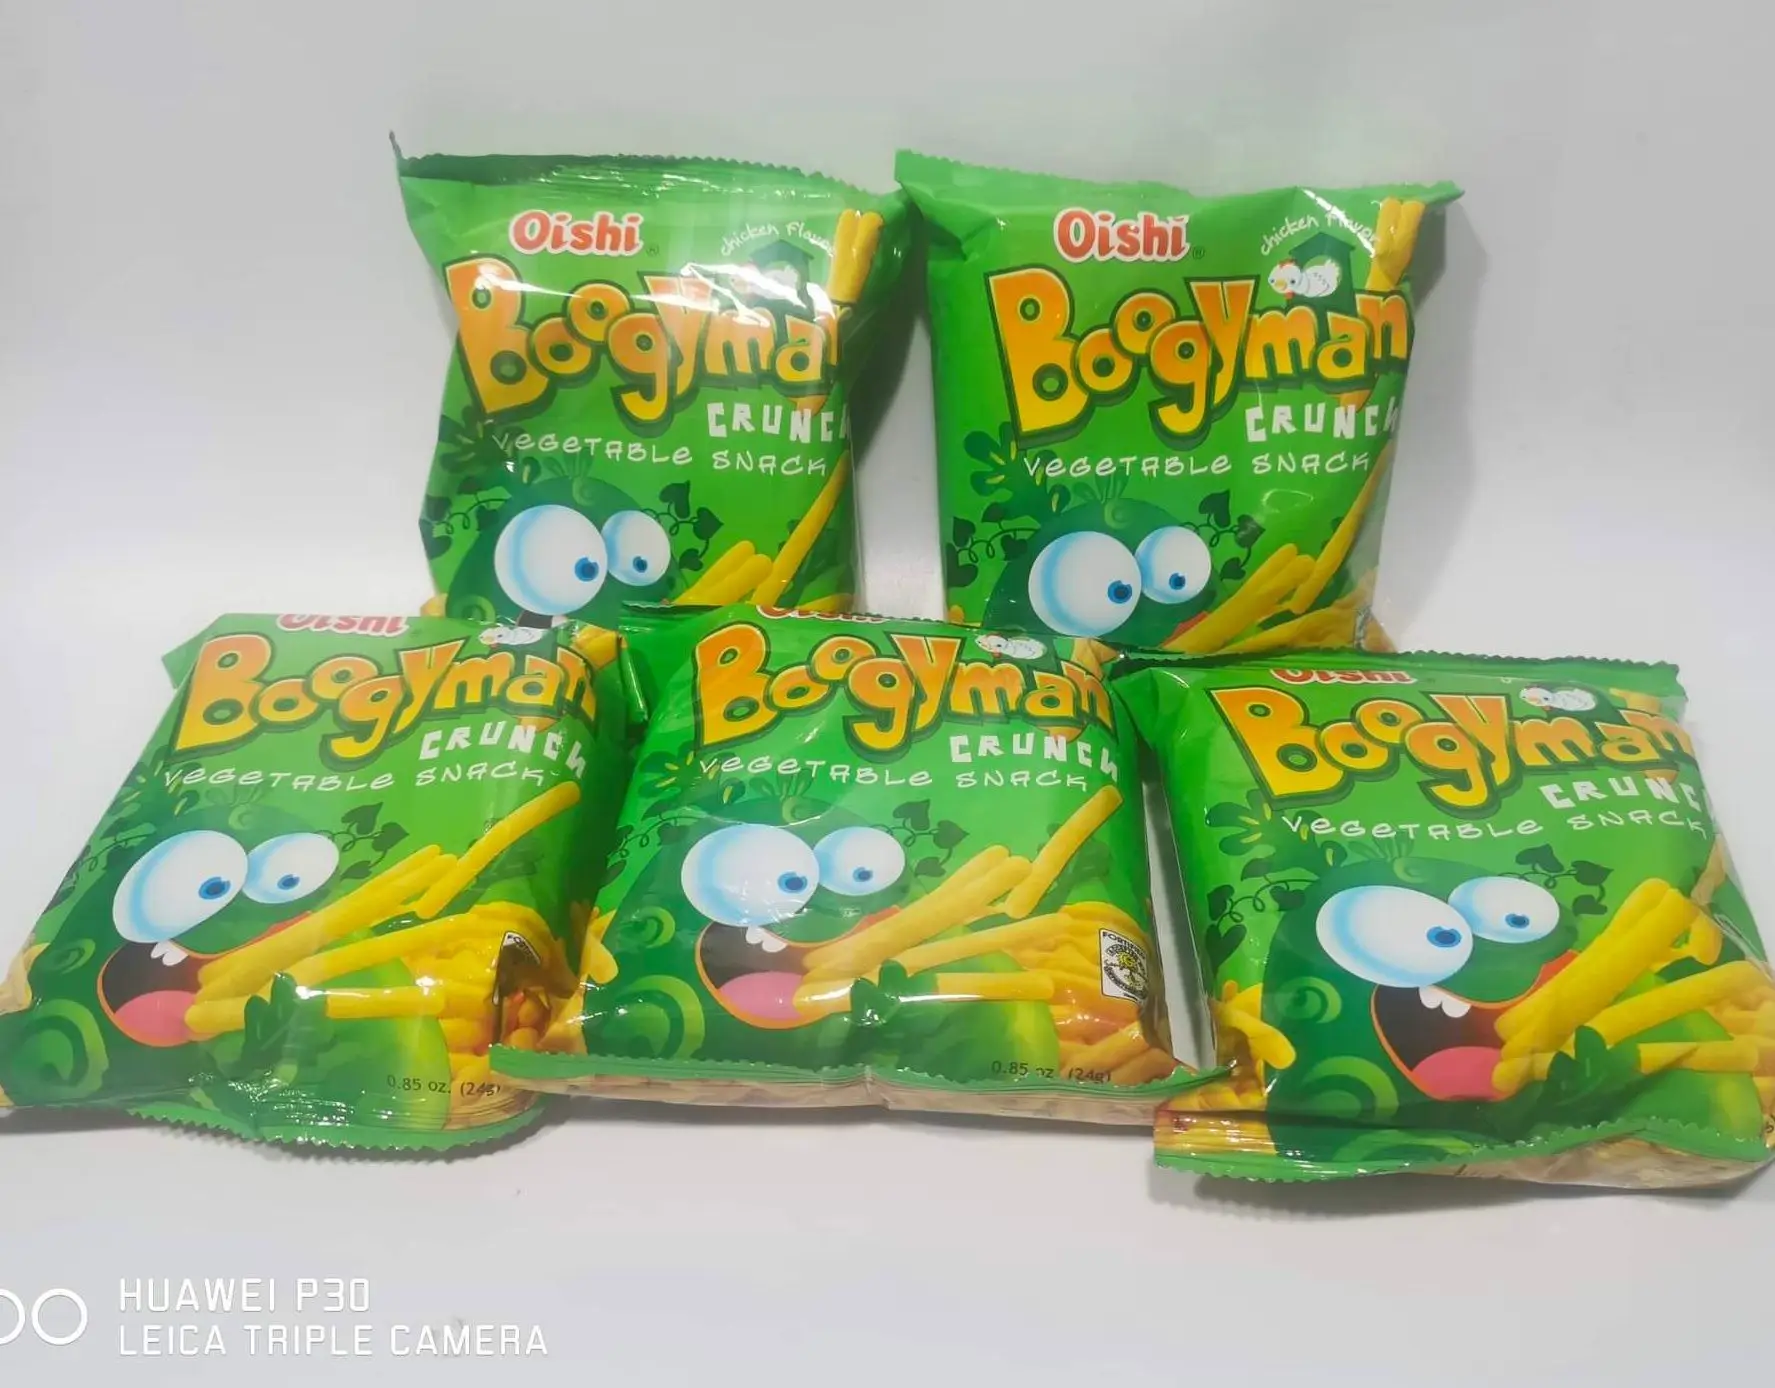 5 Packs of Oishi Boogyman! Crunch (24g)